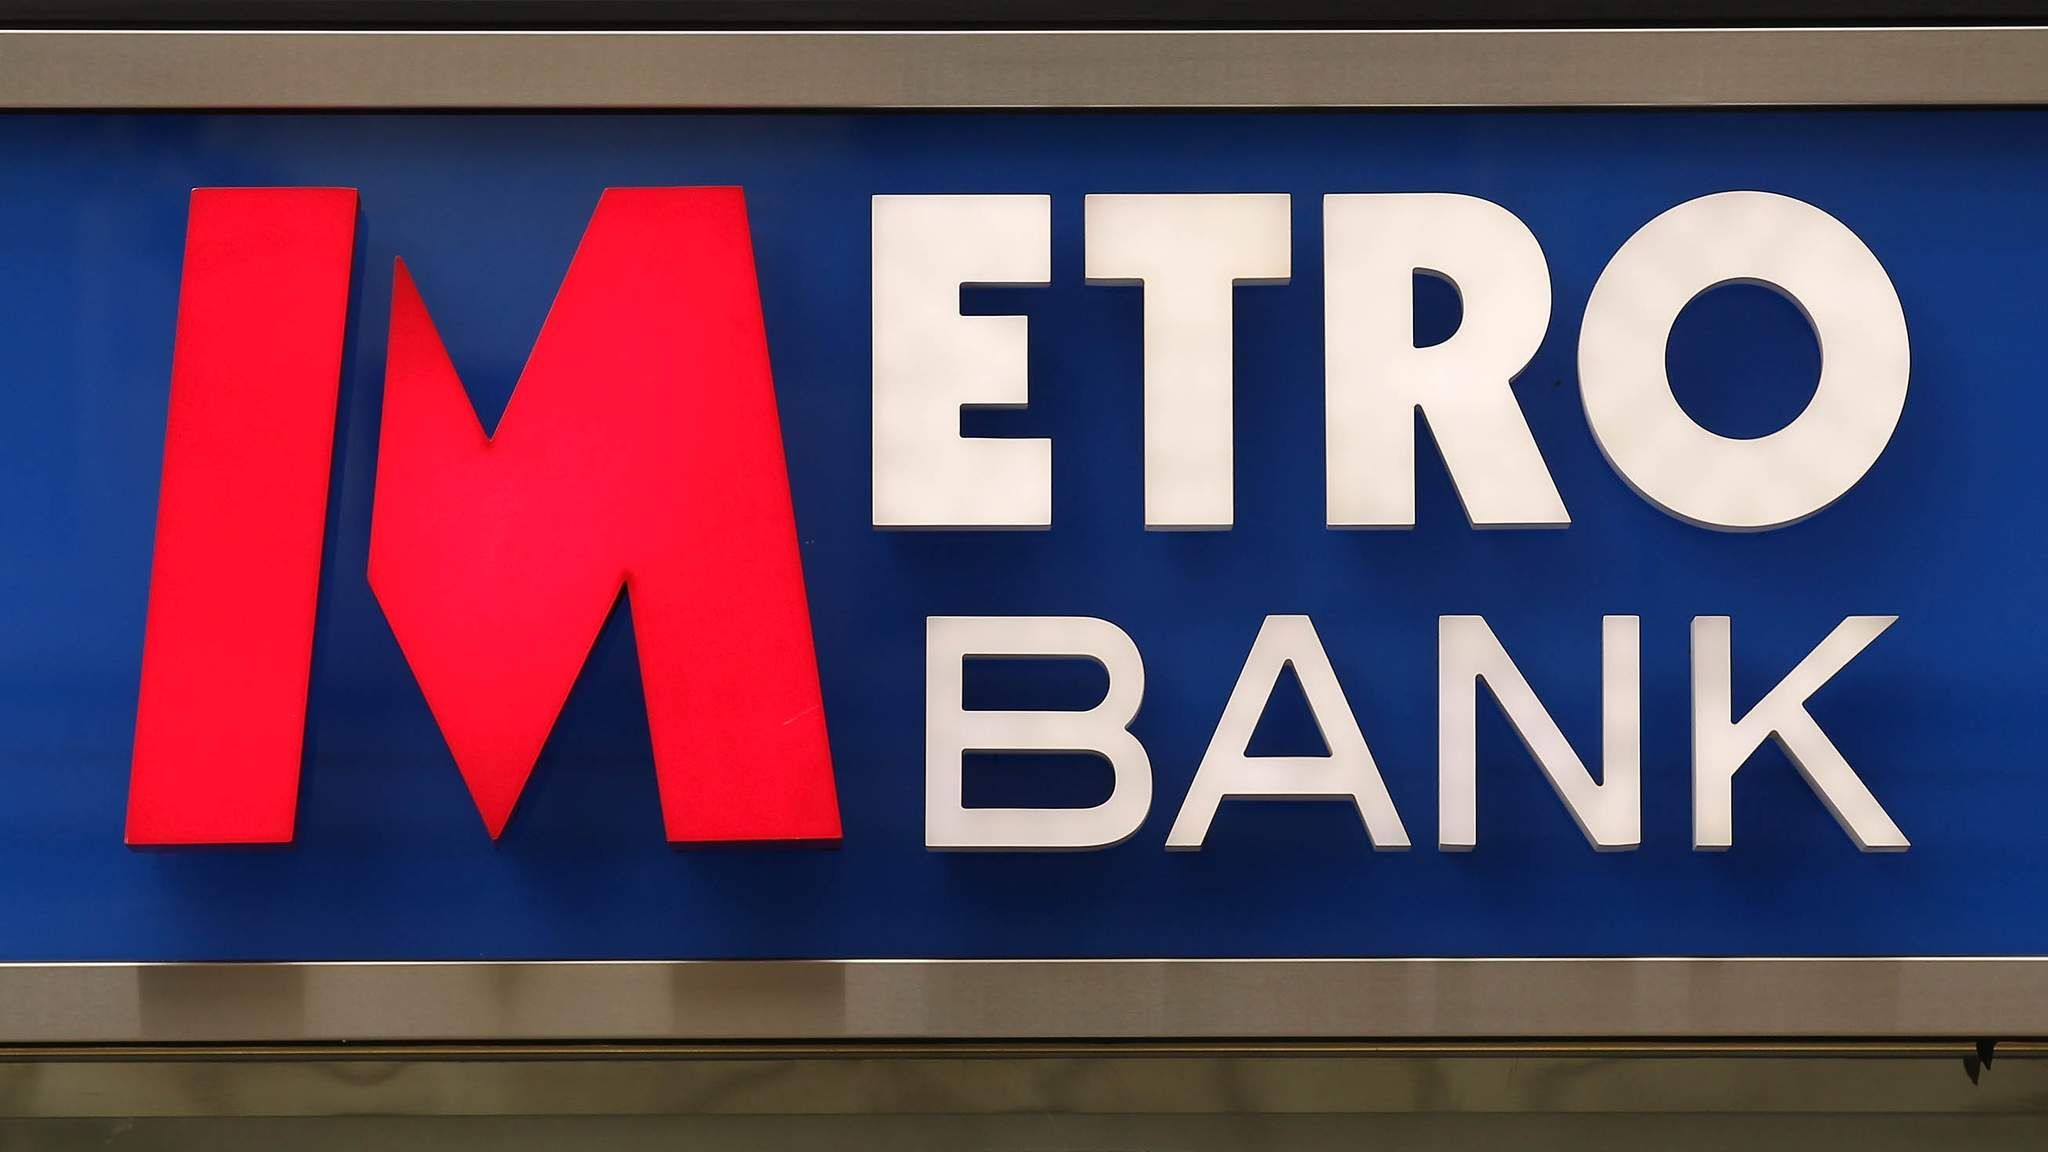 Метро банк телефон. Metro Bank. Metro Bank без фона. Metropolitan Bank.